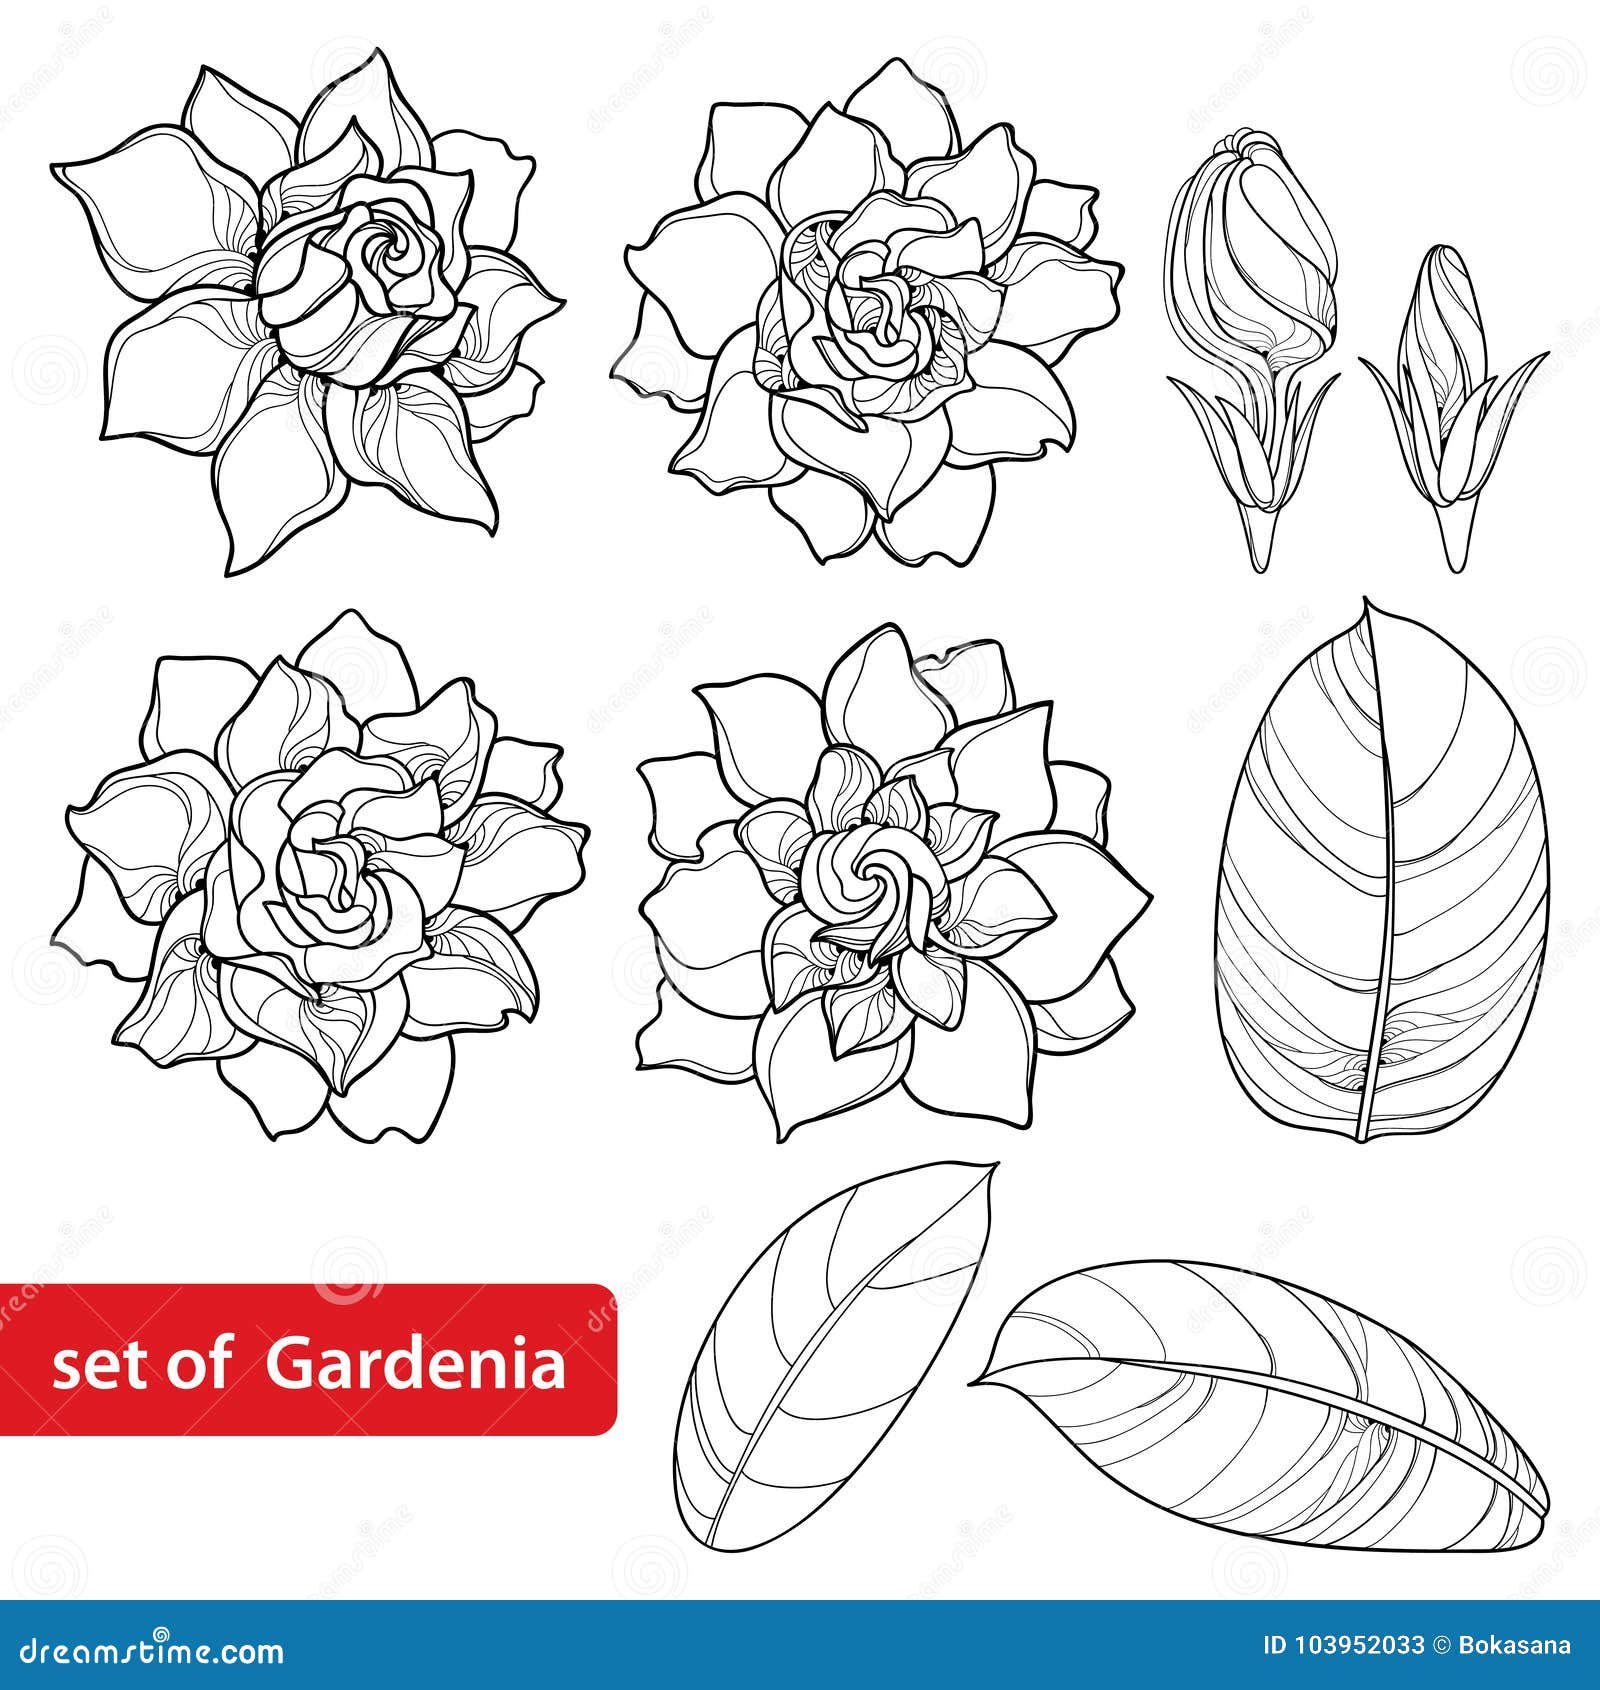 Gardenia tattoo 2 by Smaragdia on DeviantArt